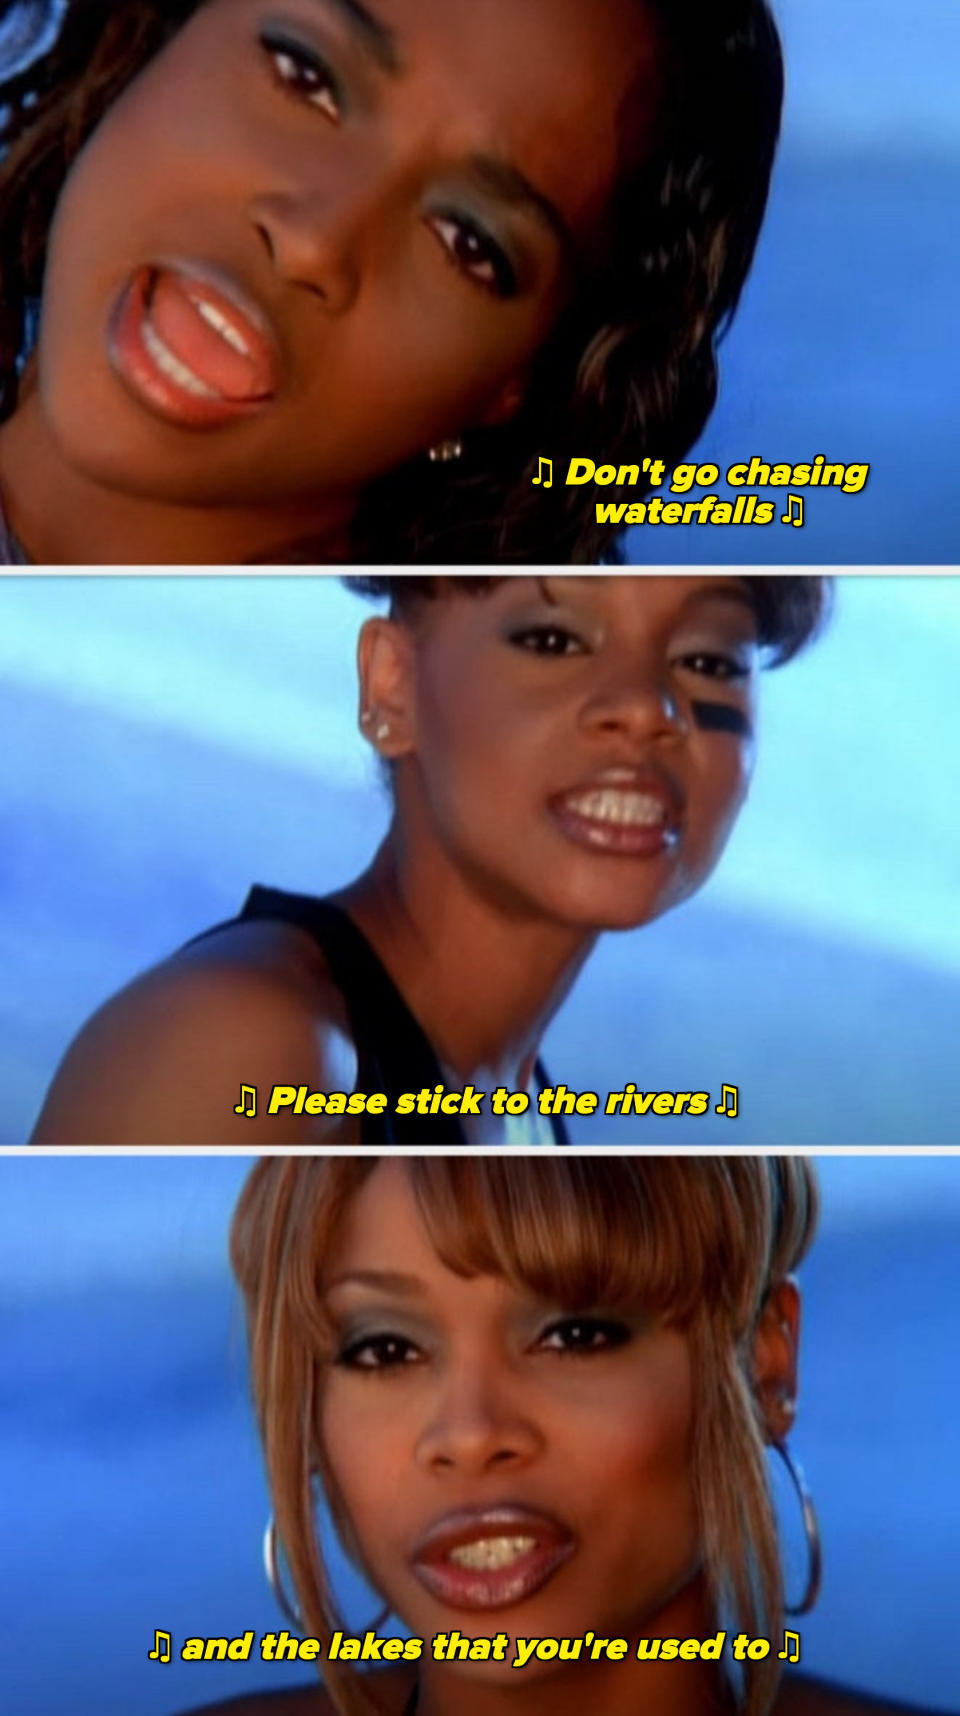 TLC in their "Waterfalls" music video